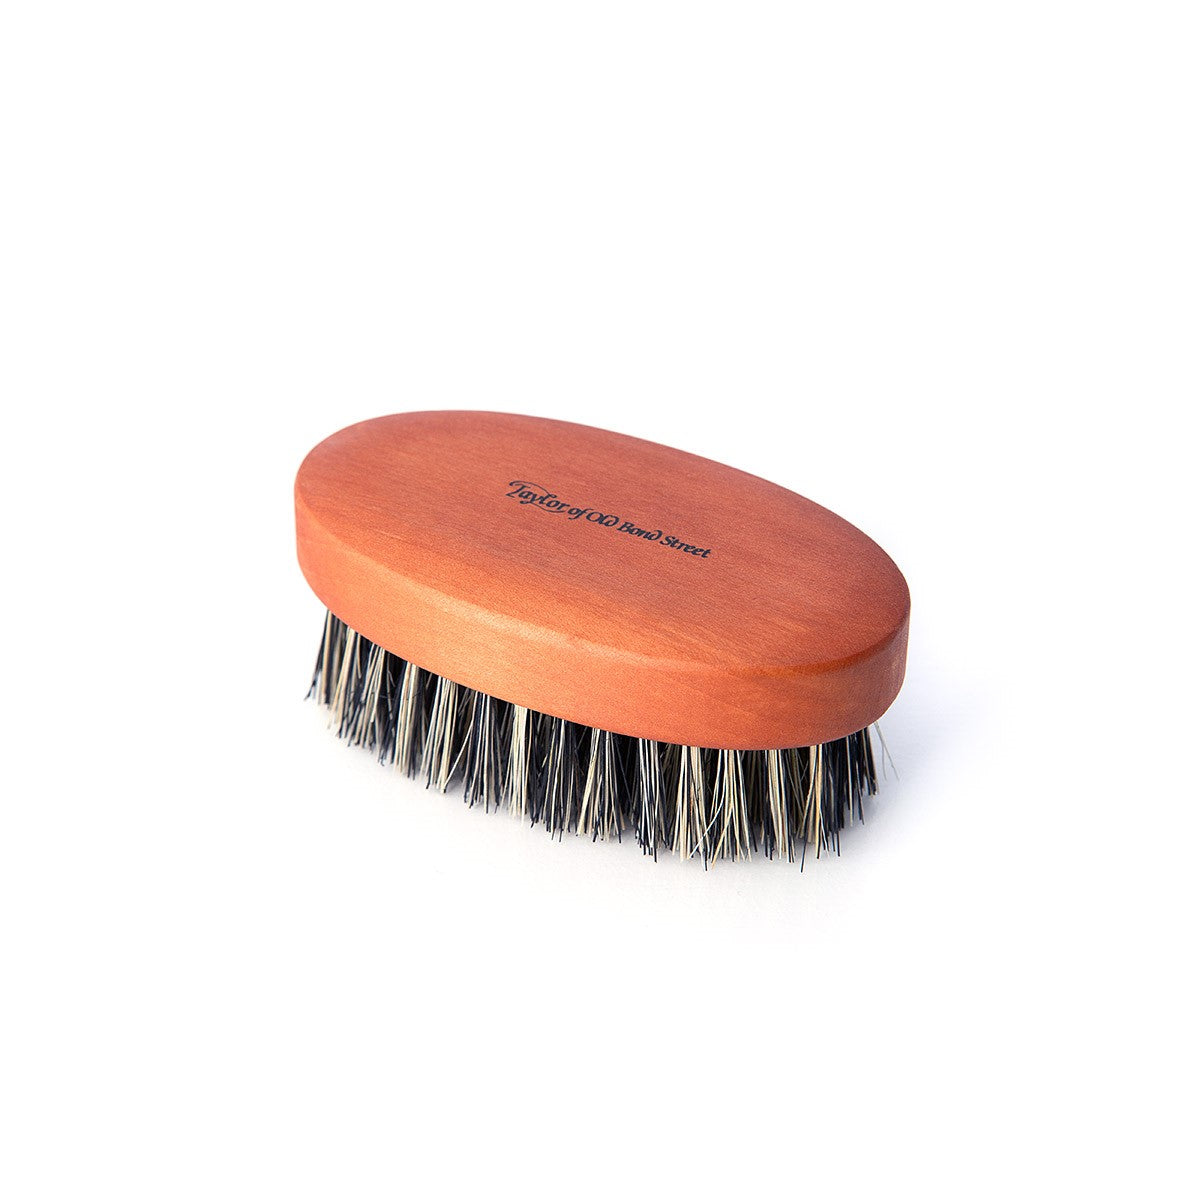 Pearwood Grey Tampico Fibre Beard Brush/travel Military Hair brush